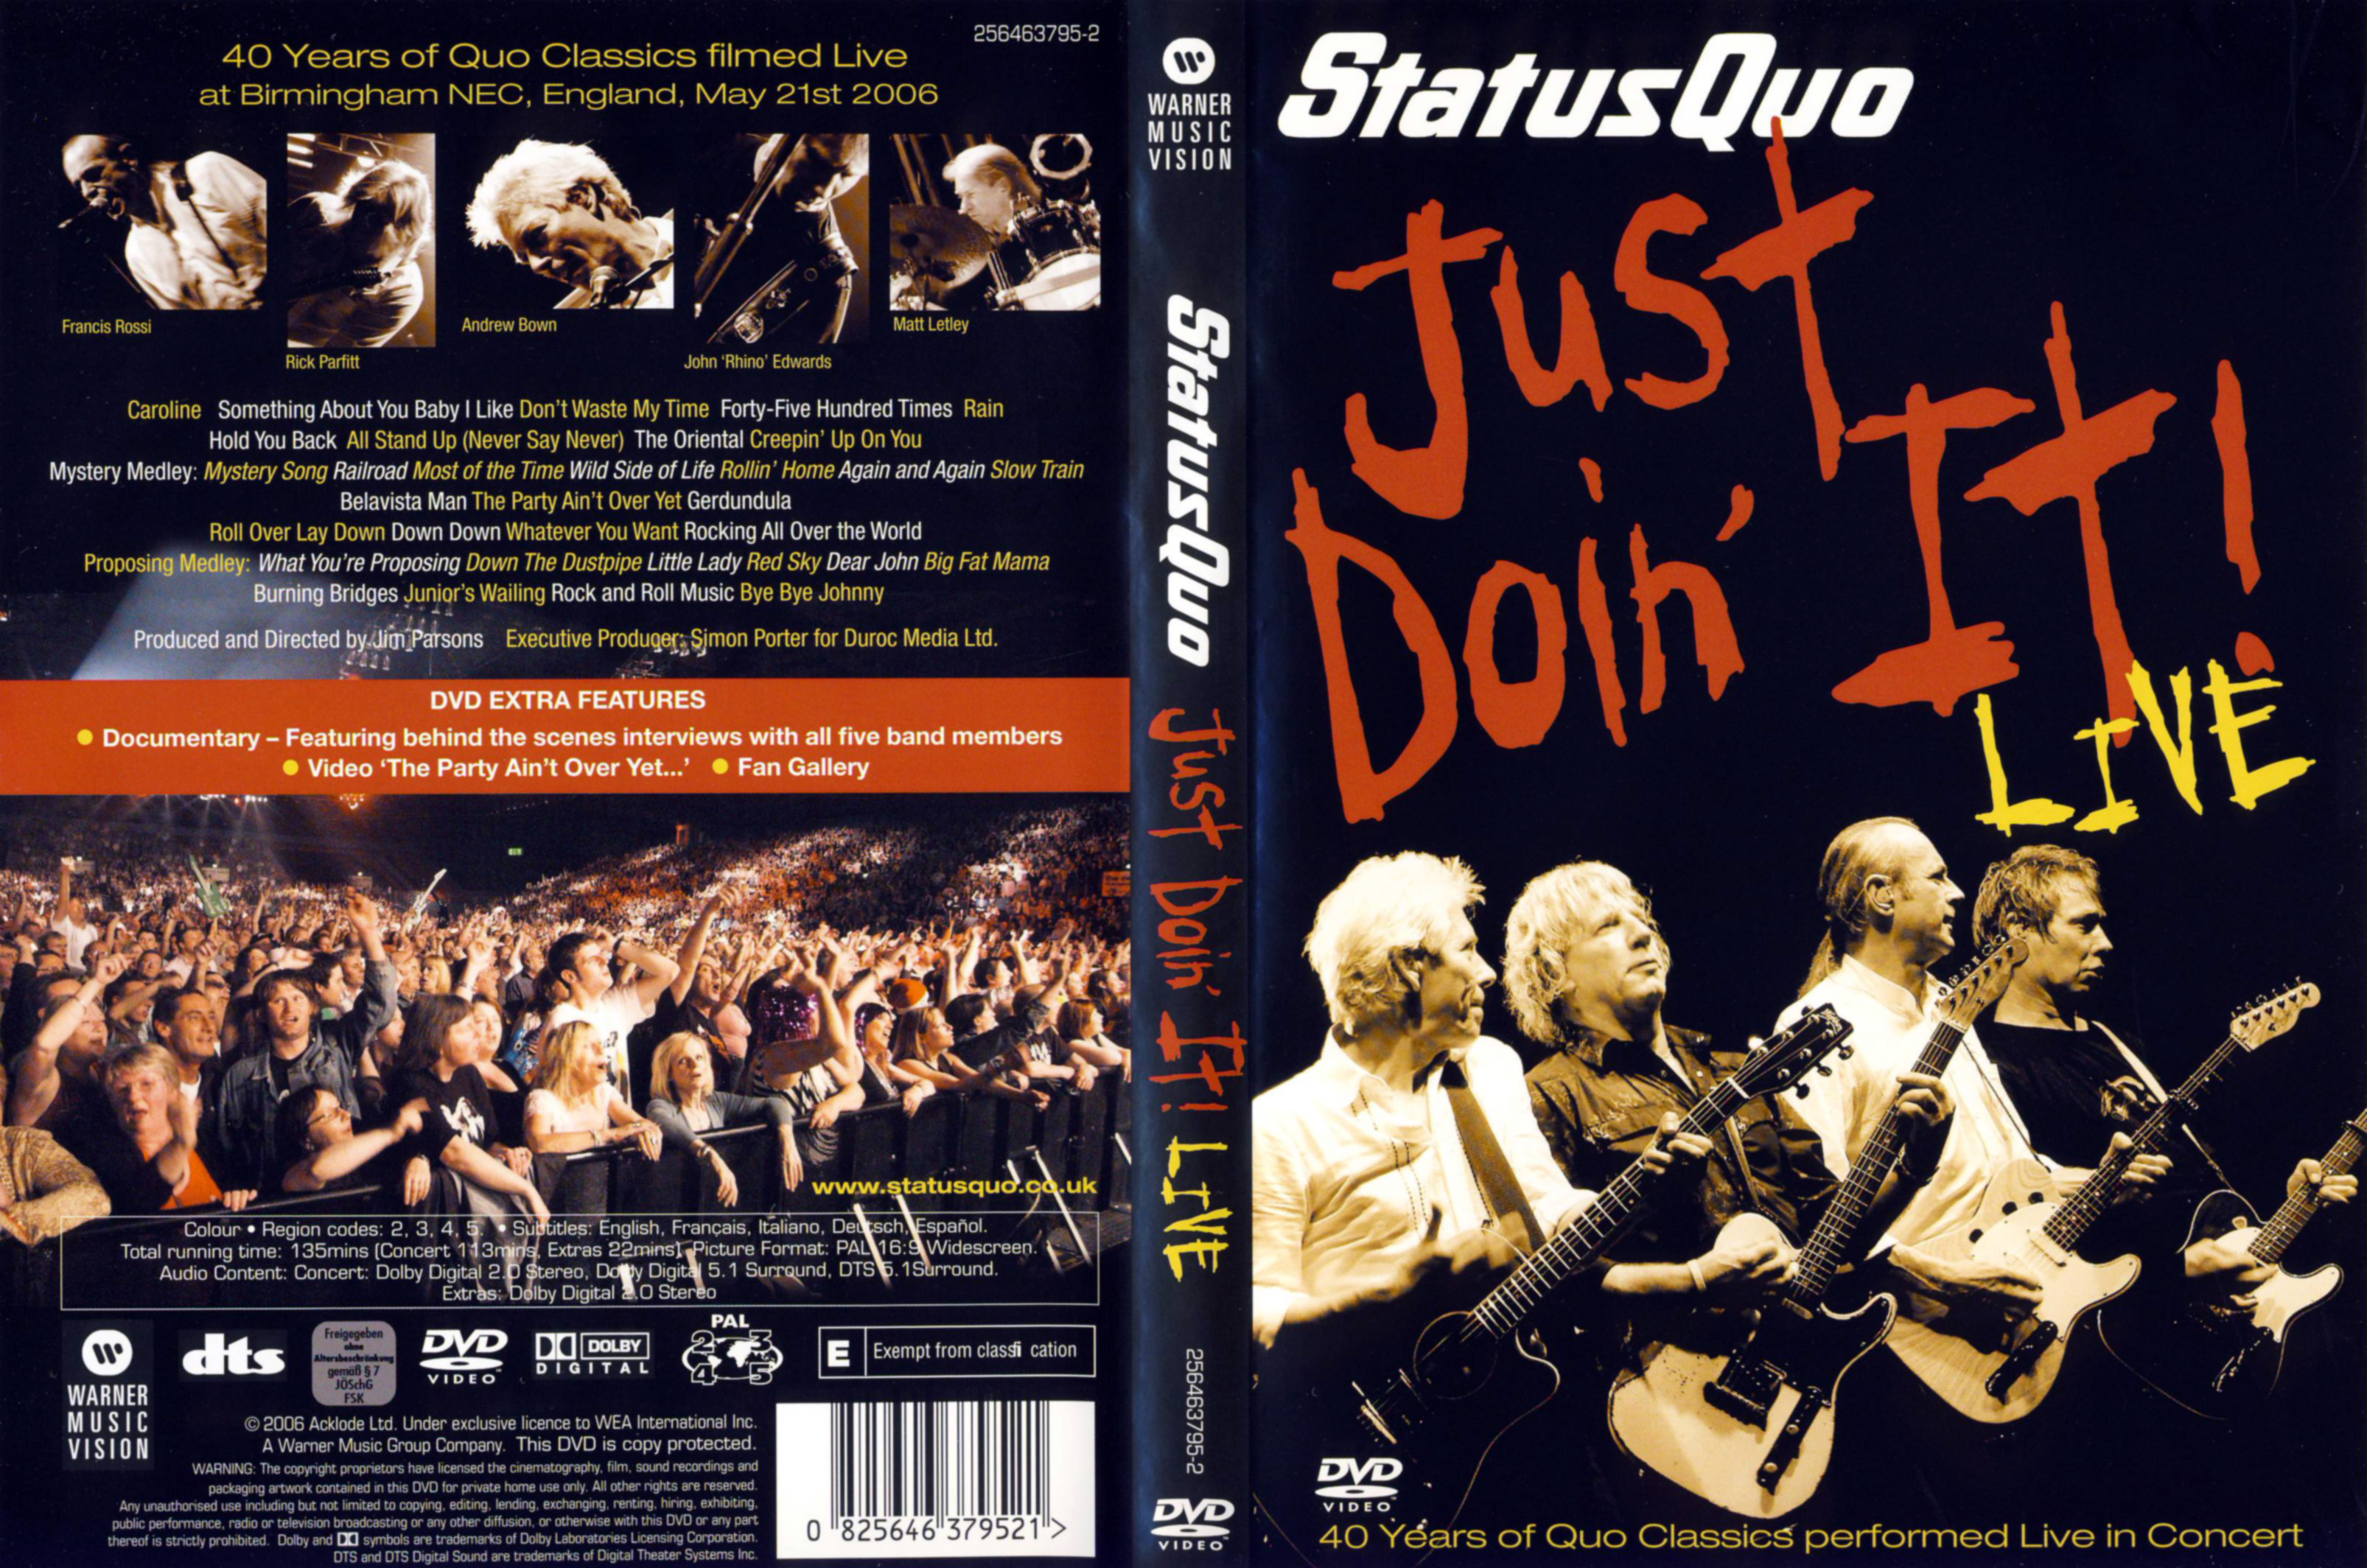 Jaquette DVD StatusQuo - Just doin it